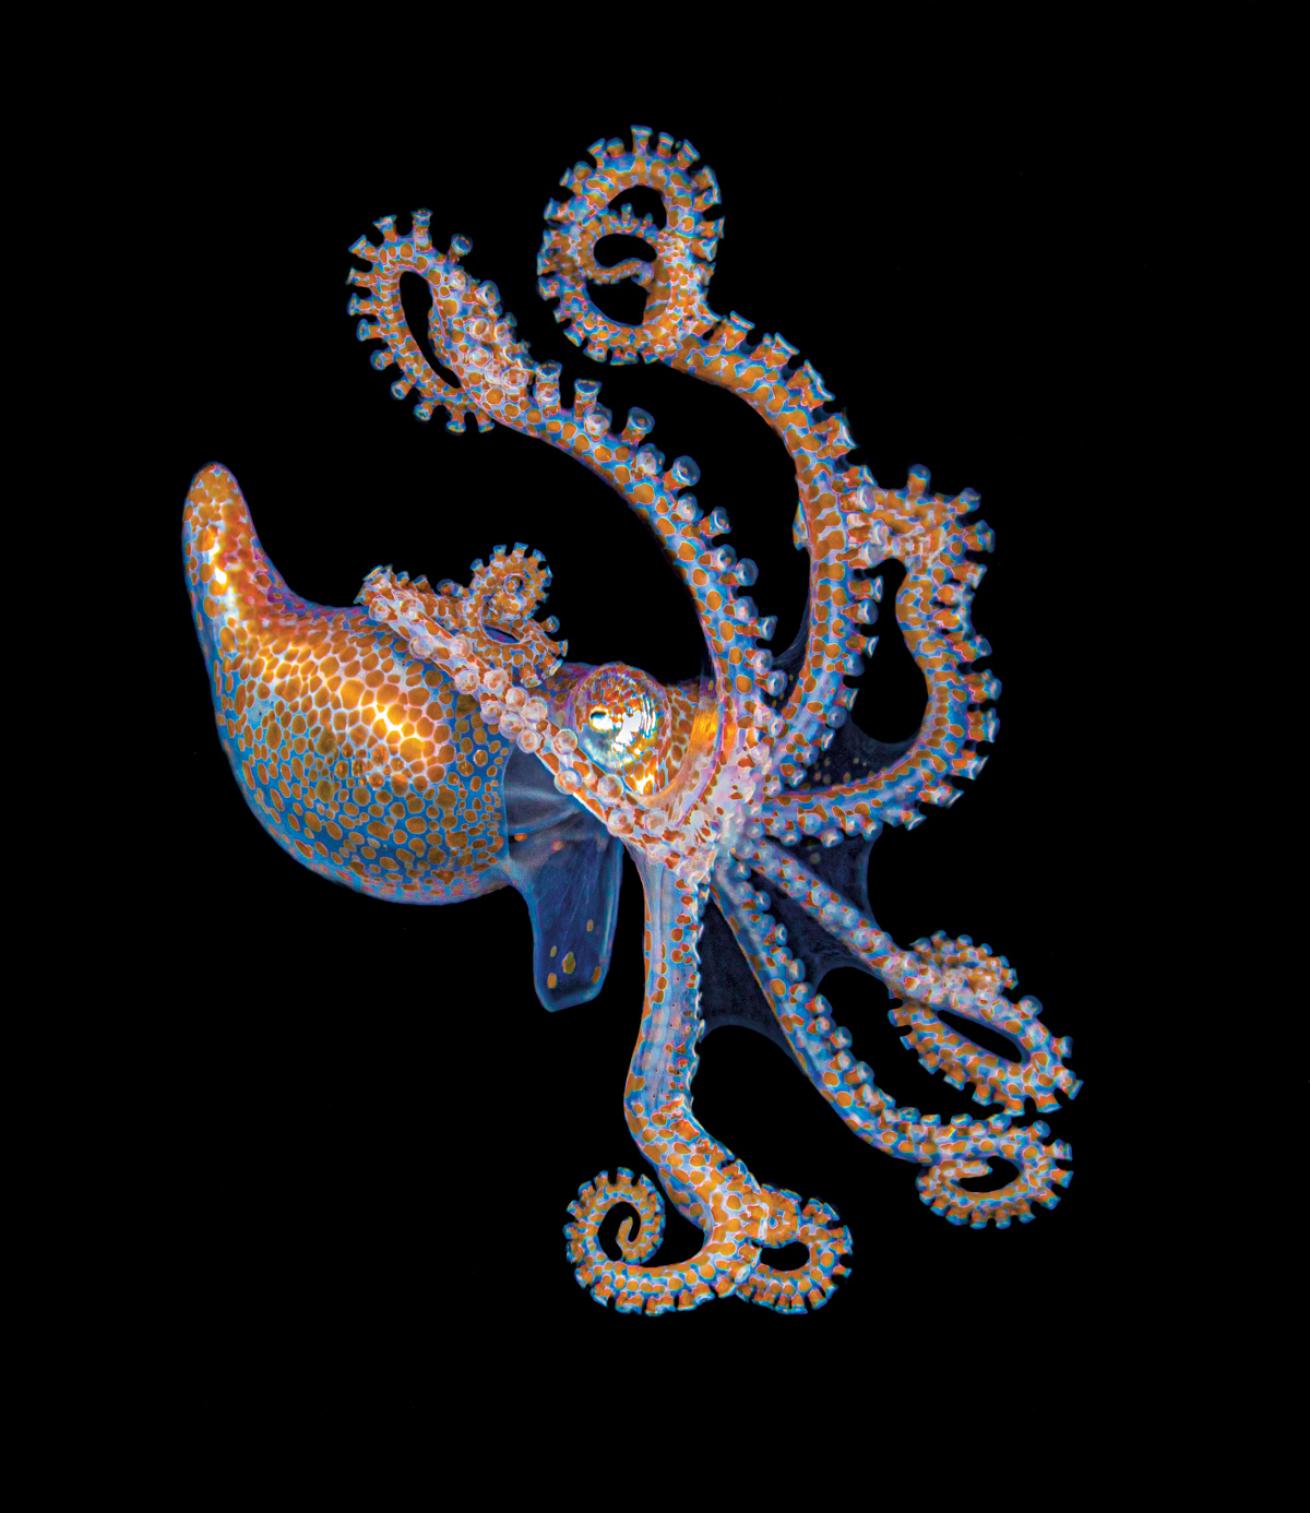 Blackwater octopus